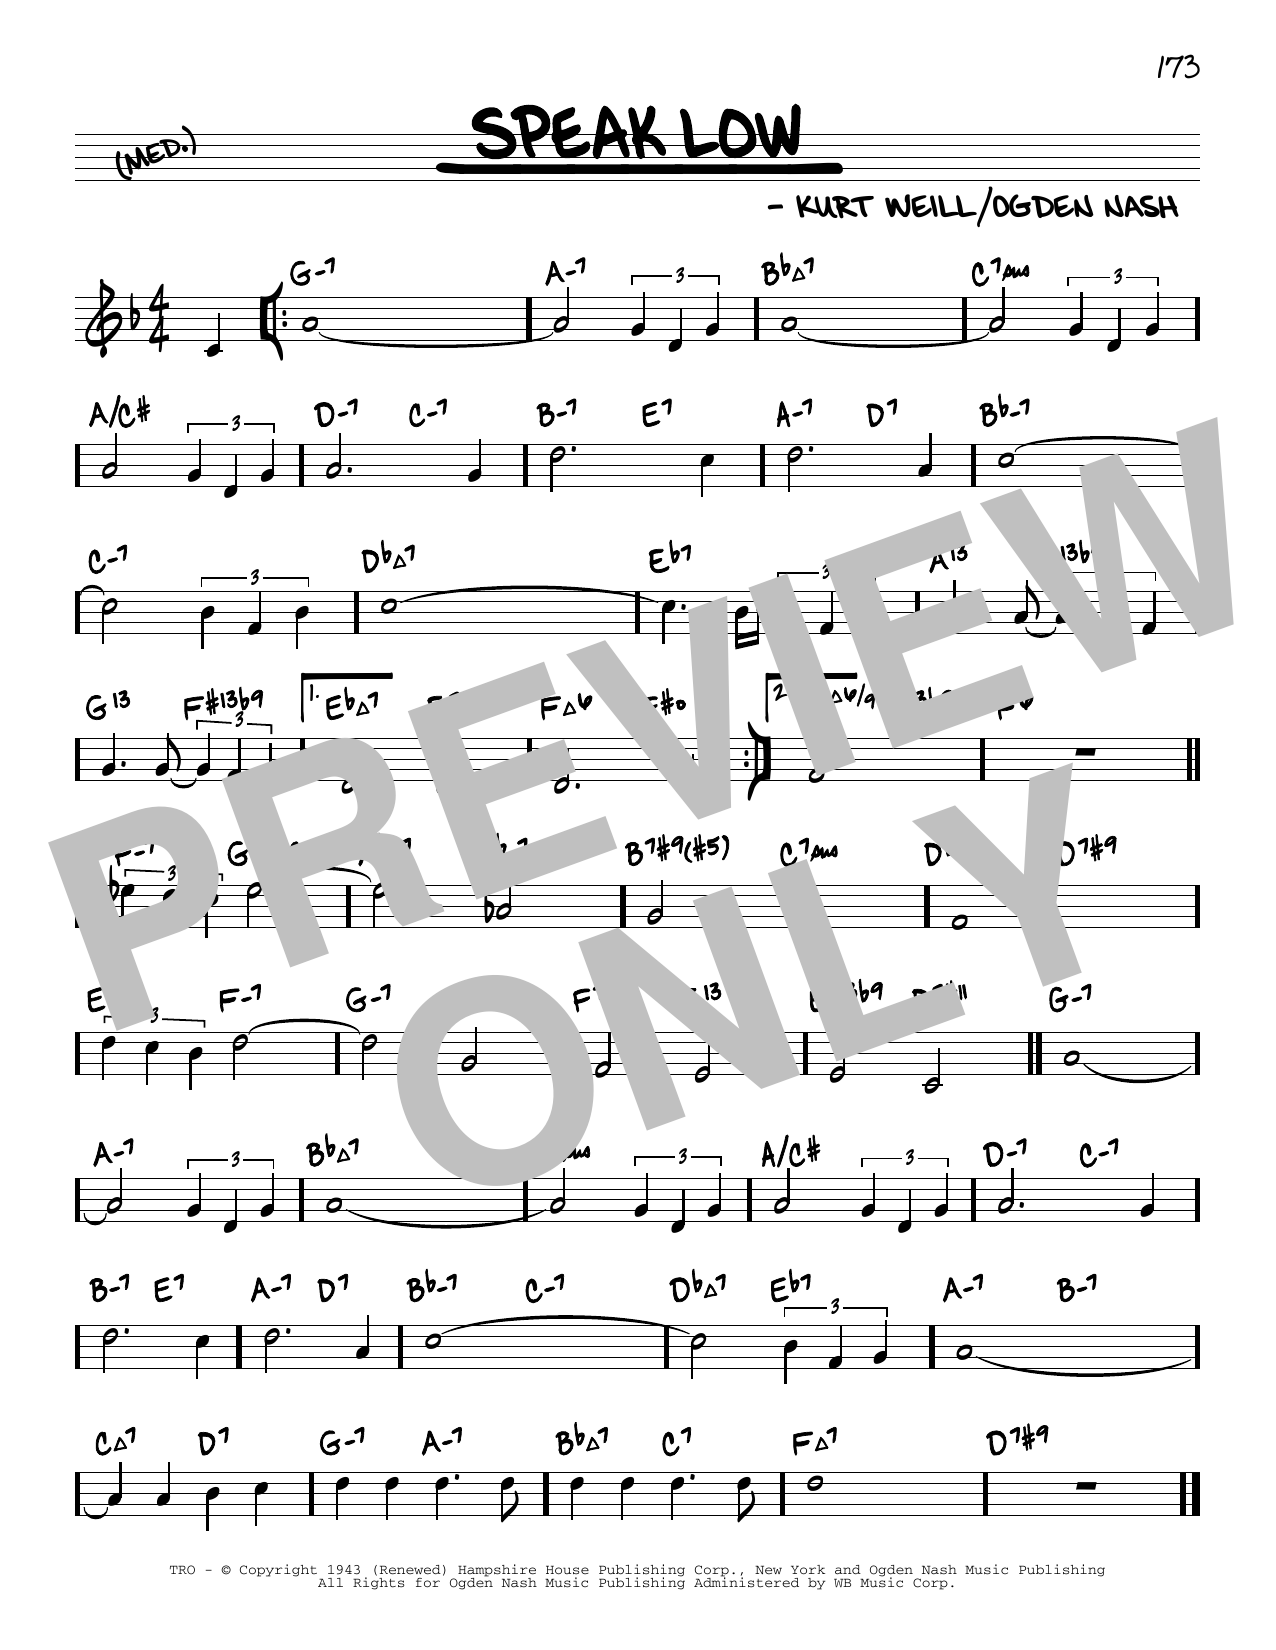 Kurt Weill Speak Low (arr. David Hazeltine) Sheet Music Notes & Chords for Real Book – Enhanced Chords - Download or Print PDF